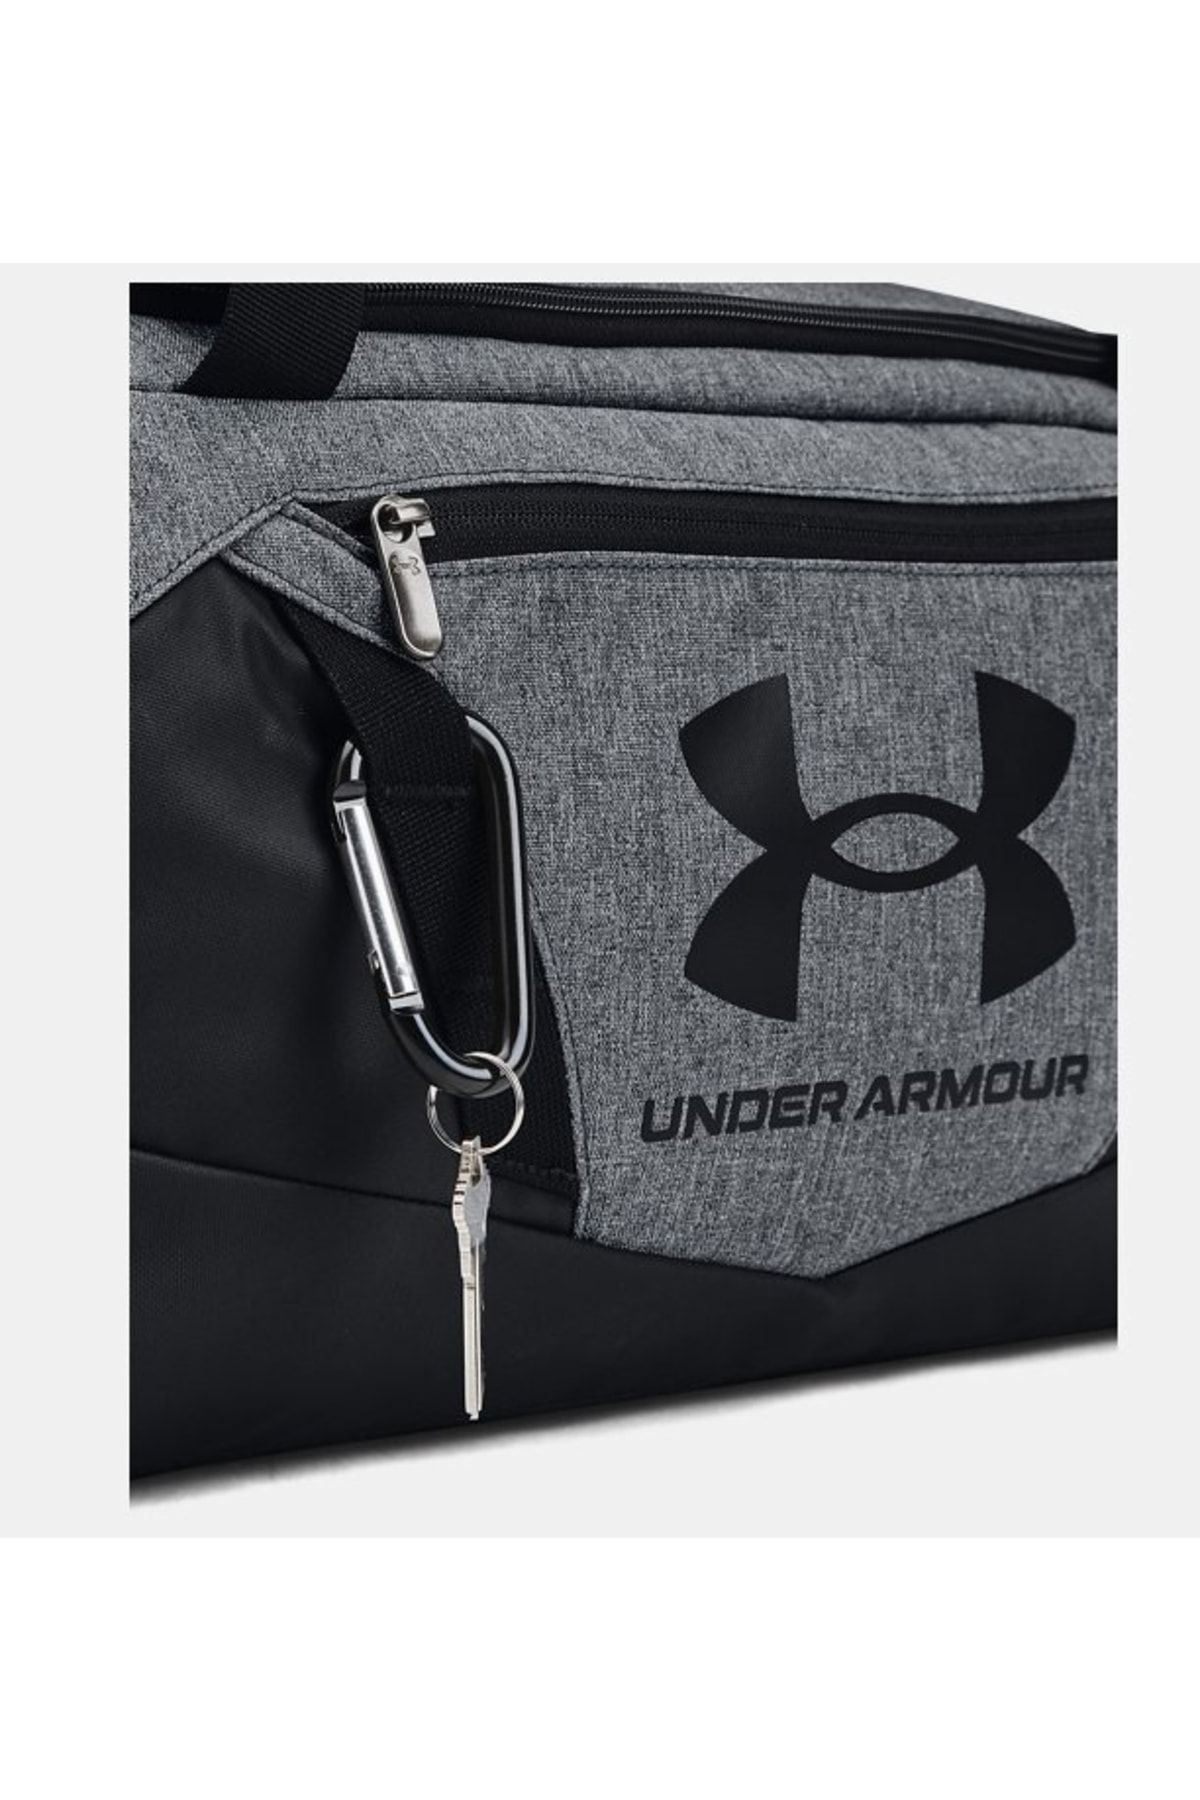 Under Armour UA undenibable 5.0 xs Cylinder Bag 1369221-012